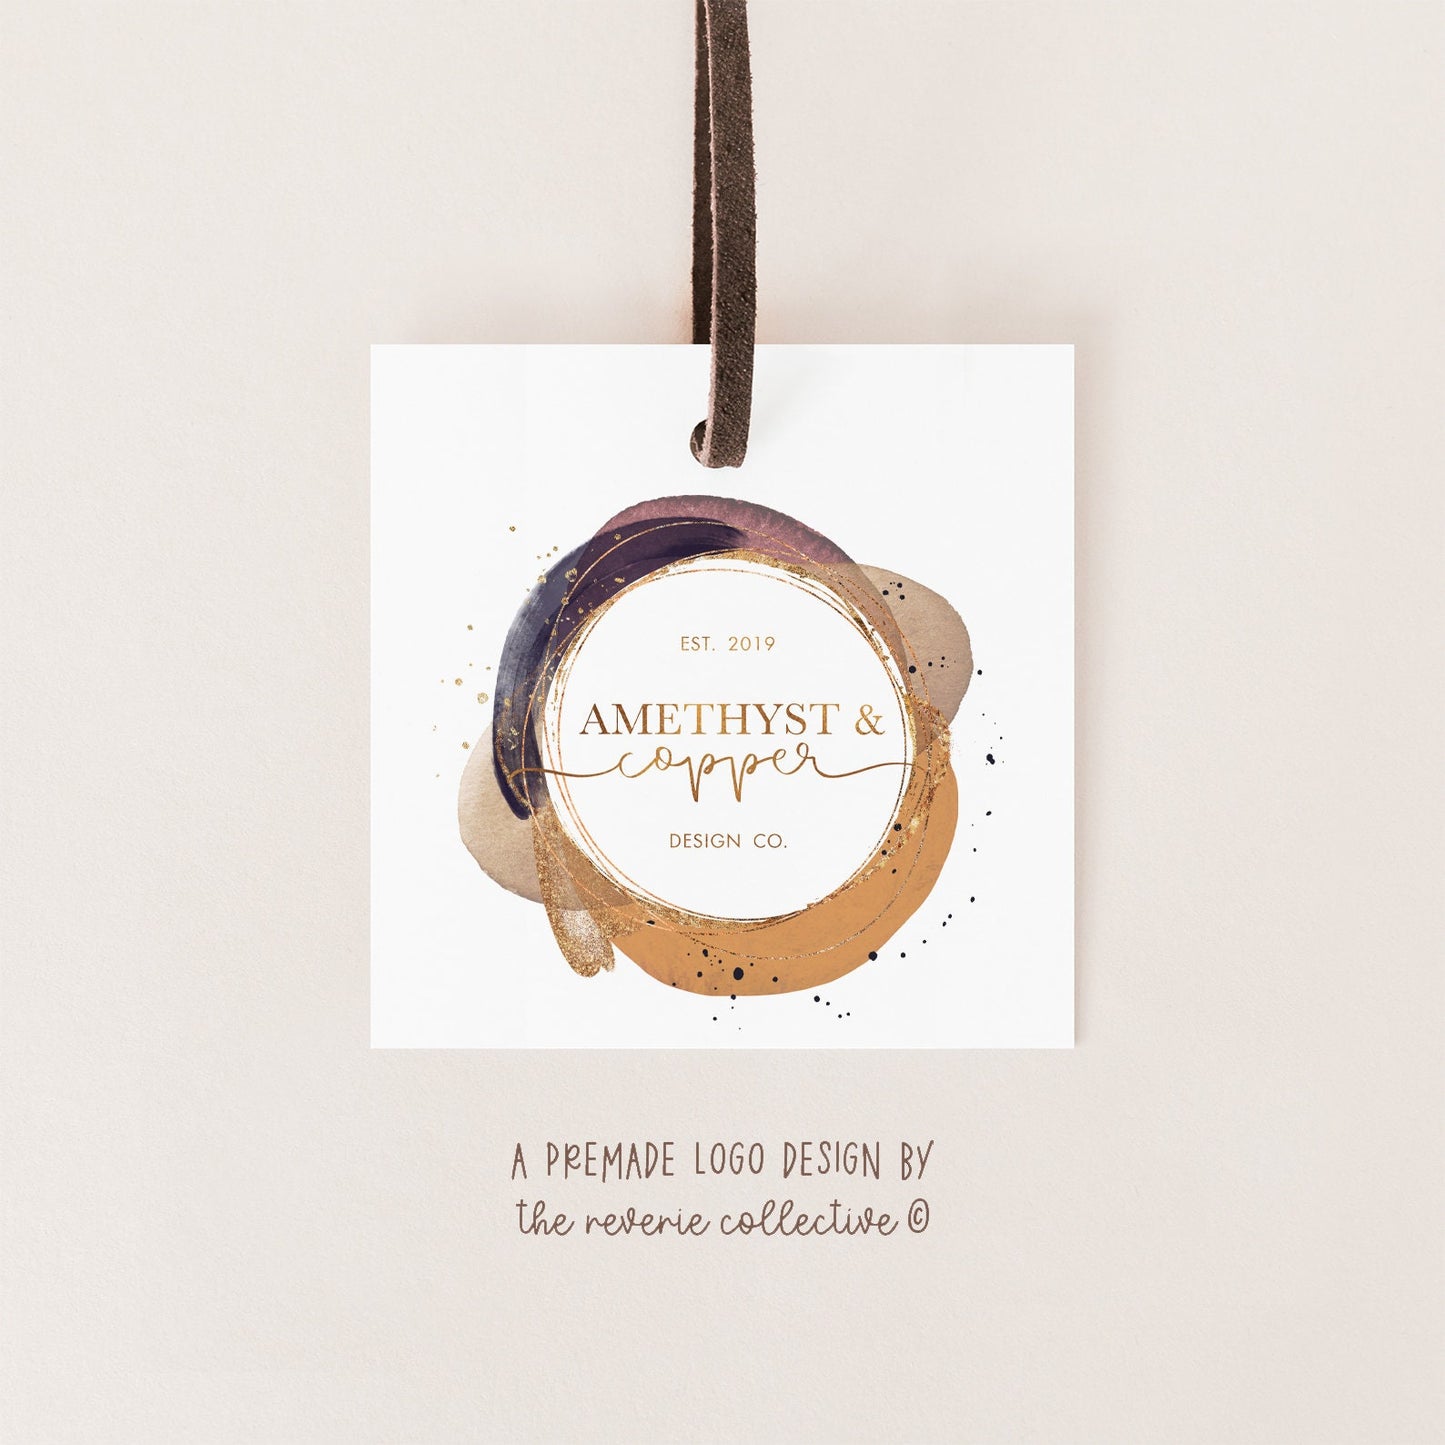 Amethyst & Copper | Premade Logo Design | Bohemian, Abstract, Modern Boho